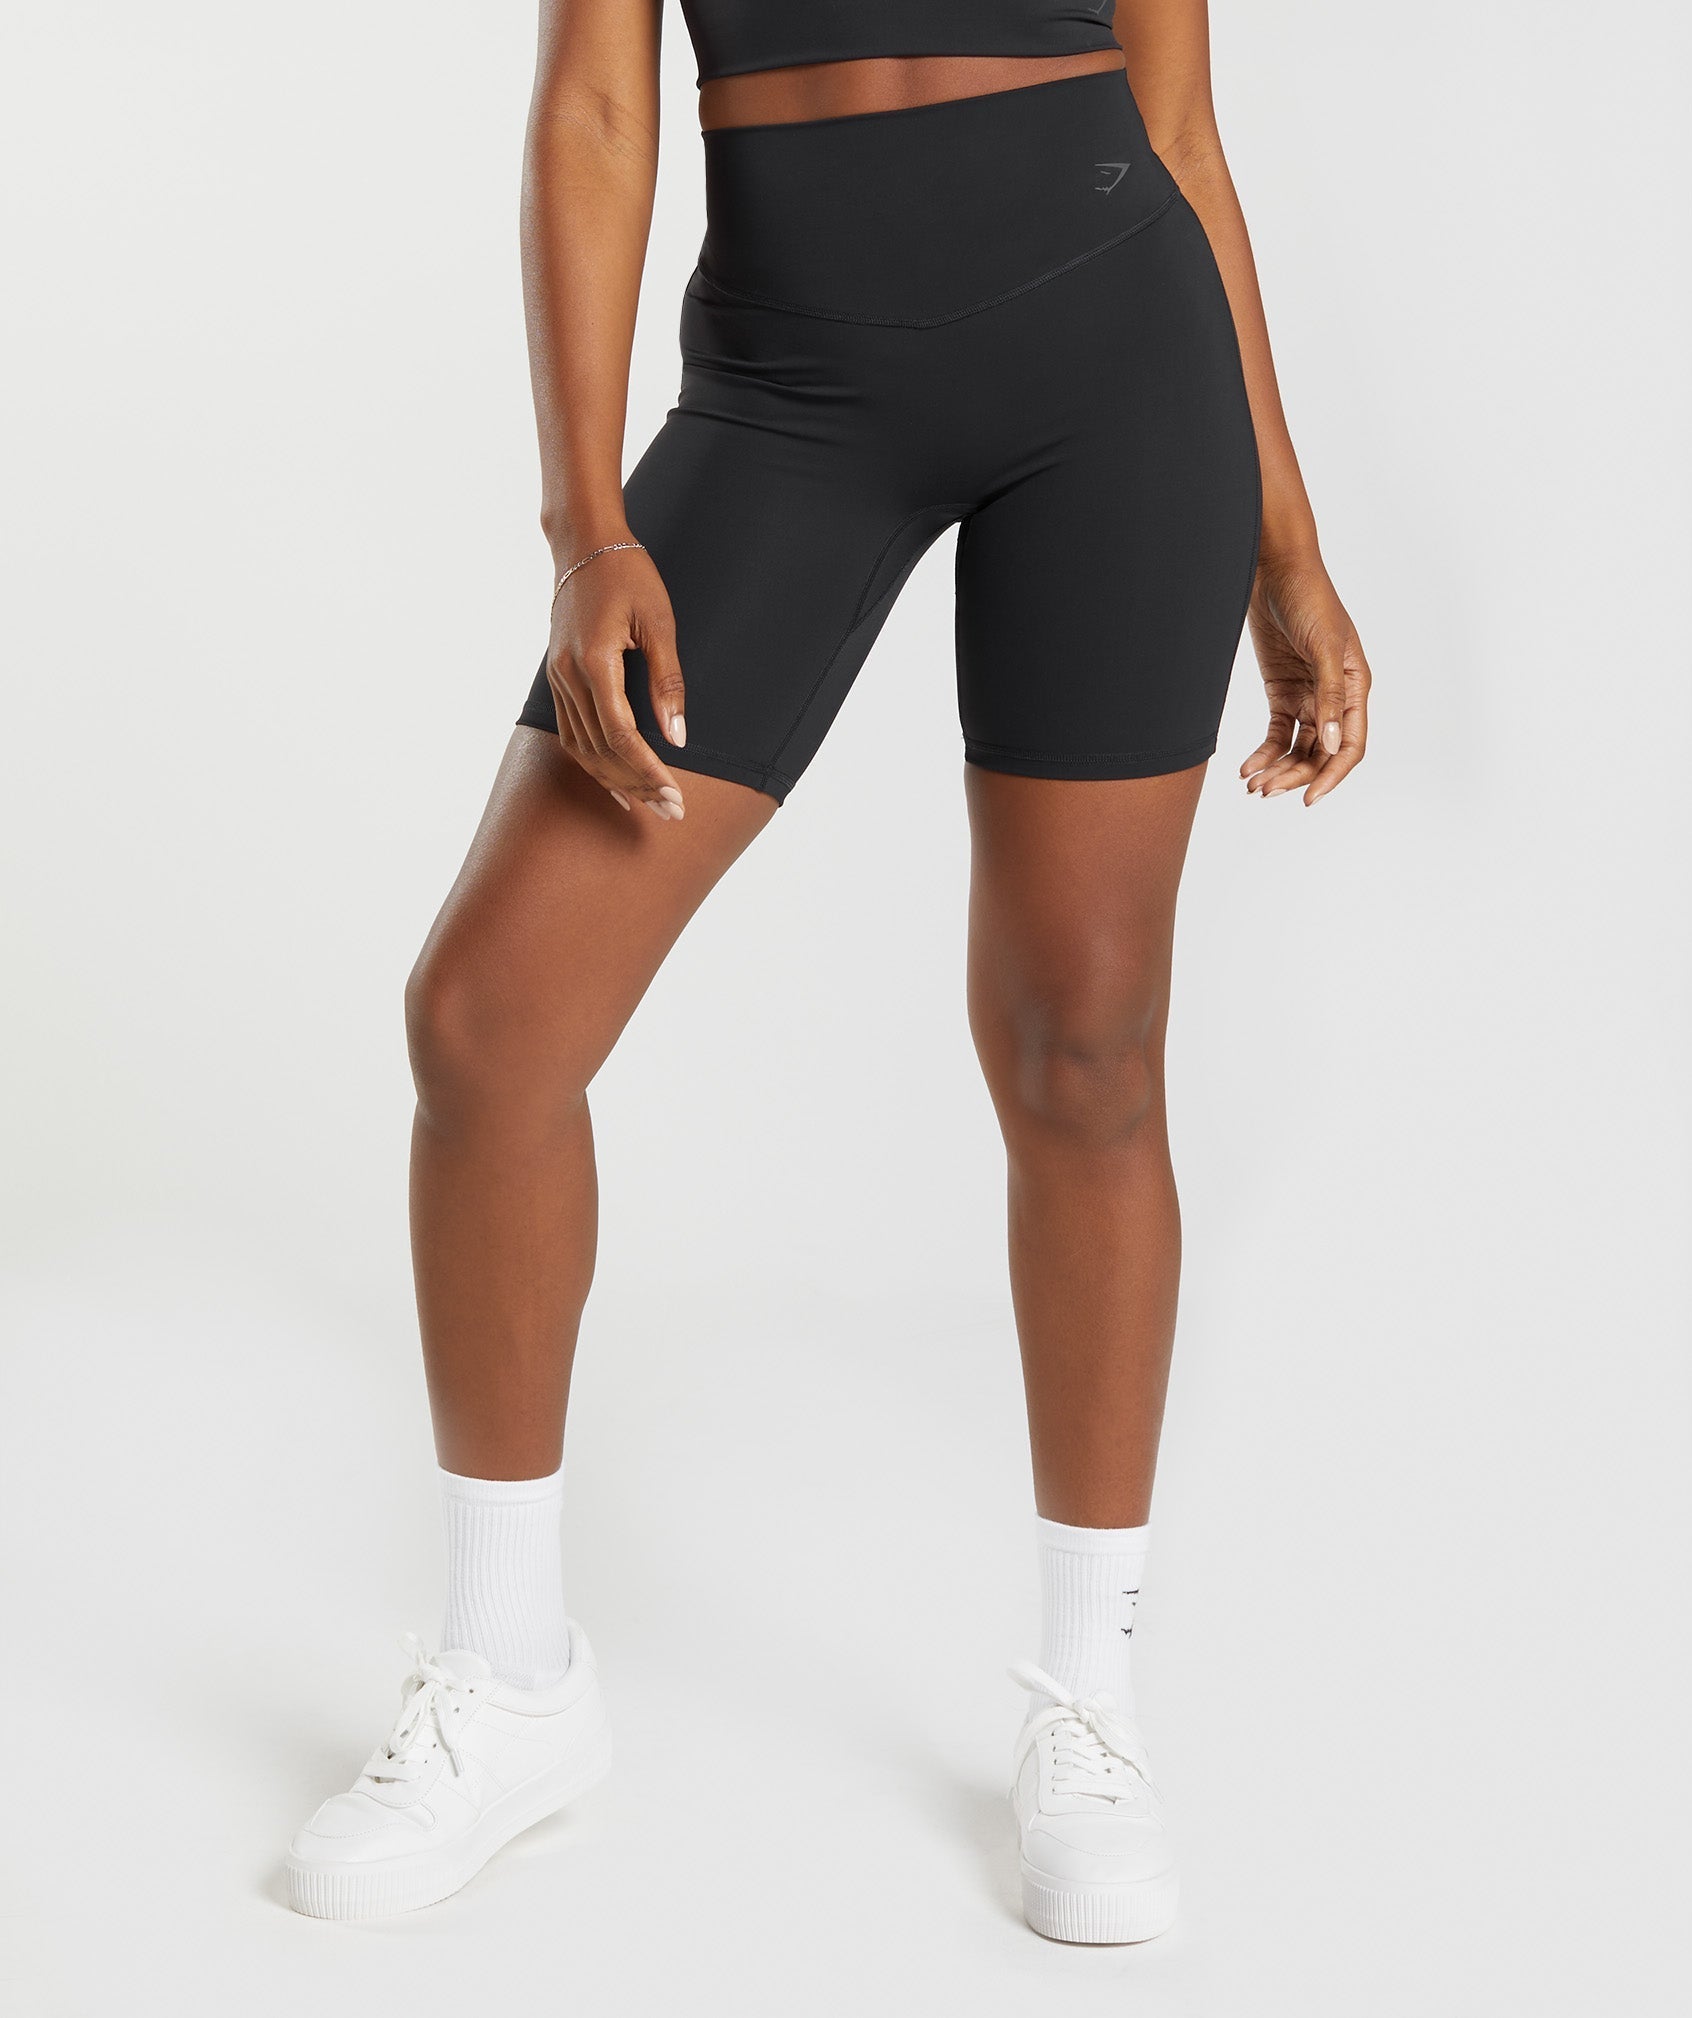 Shop Women's Bike Shorts, Gym Shorts & Workout Shorts